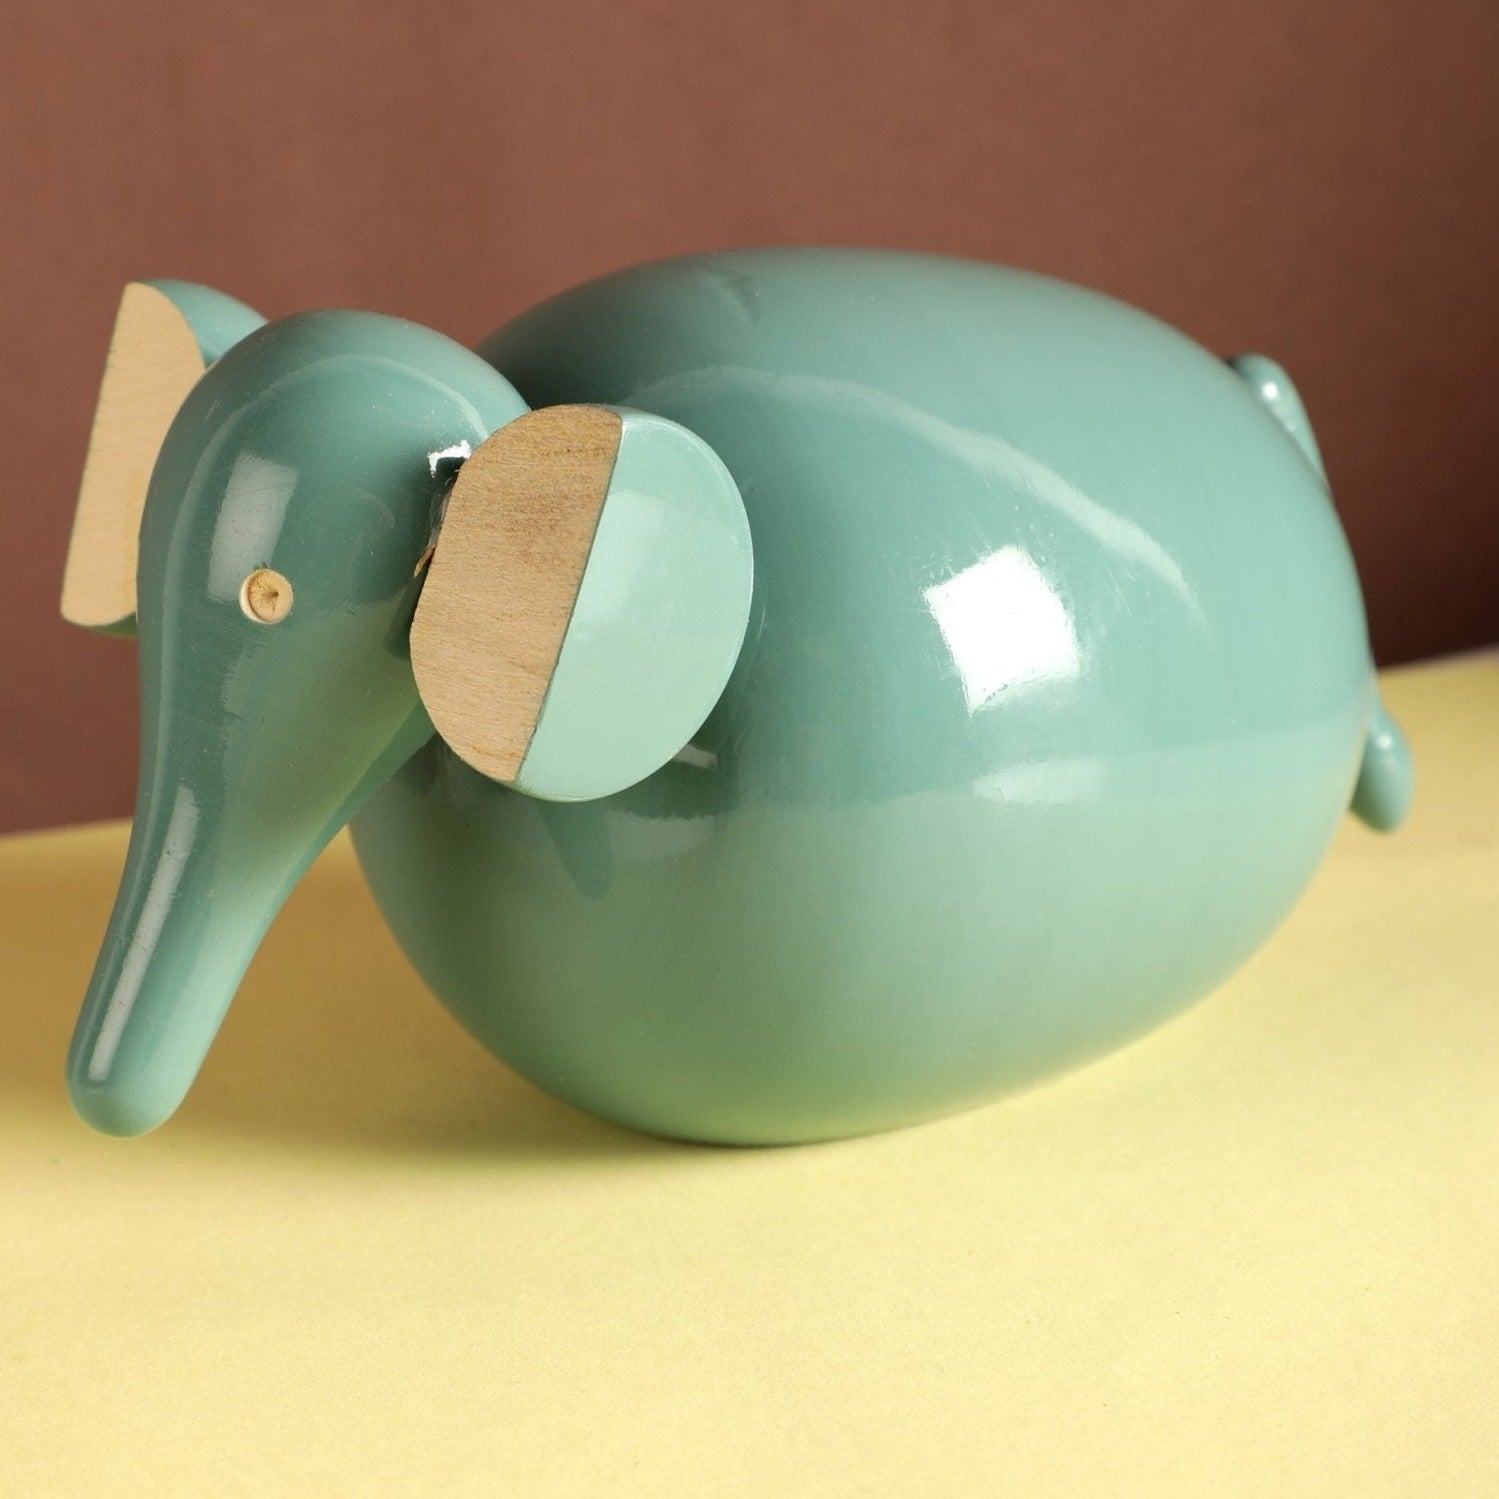 a green ceramic elephant figurine sitting on a table